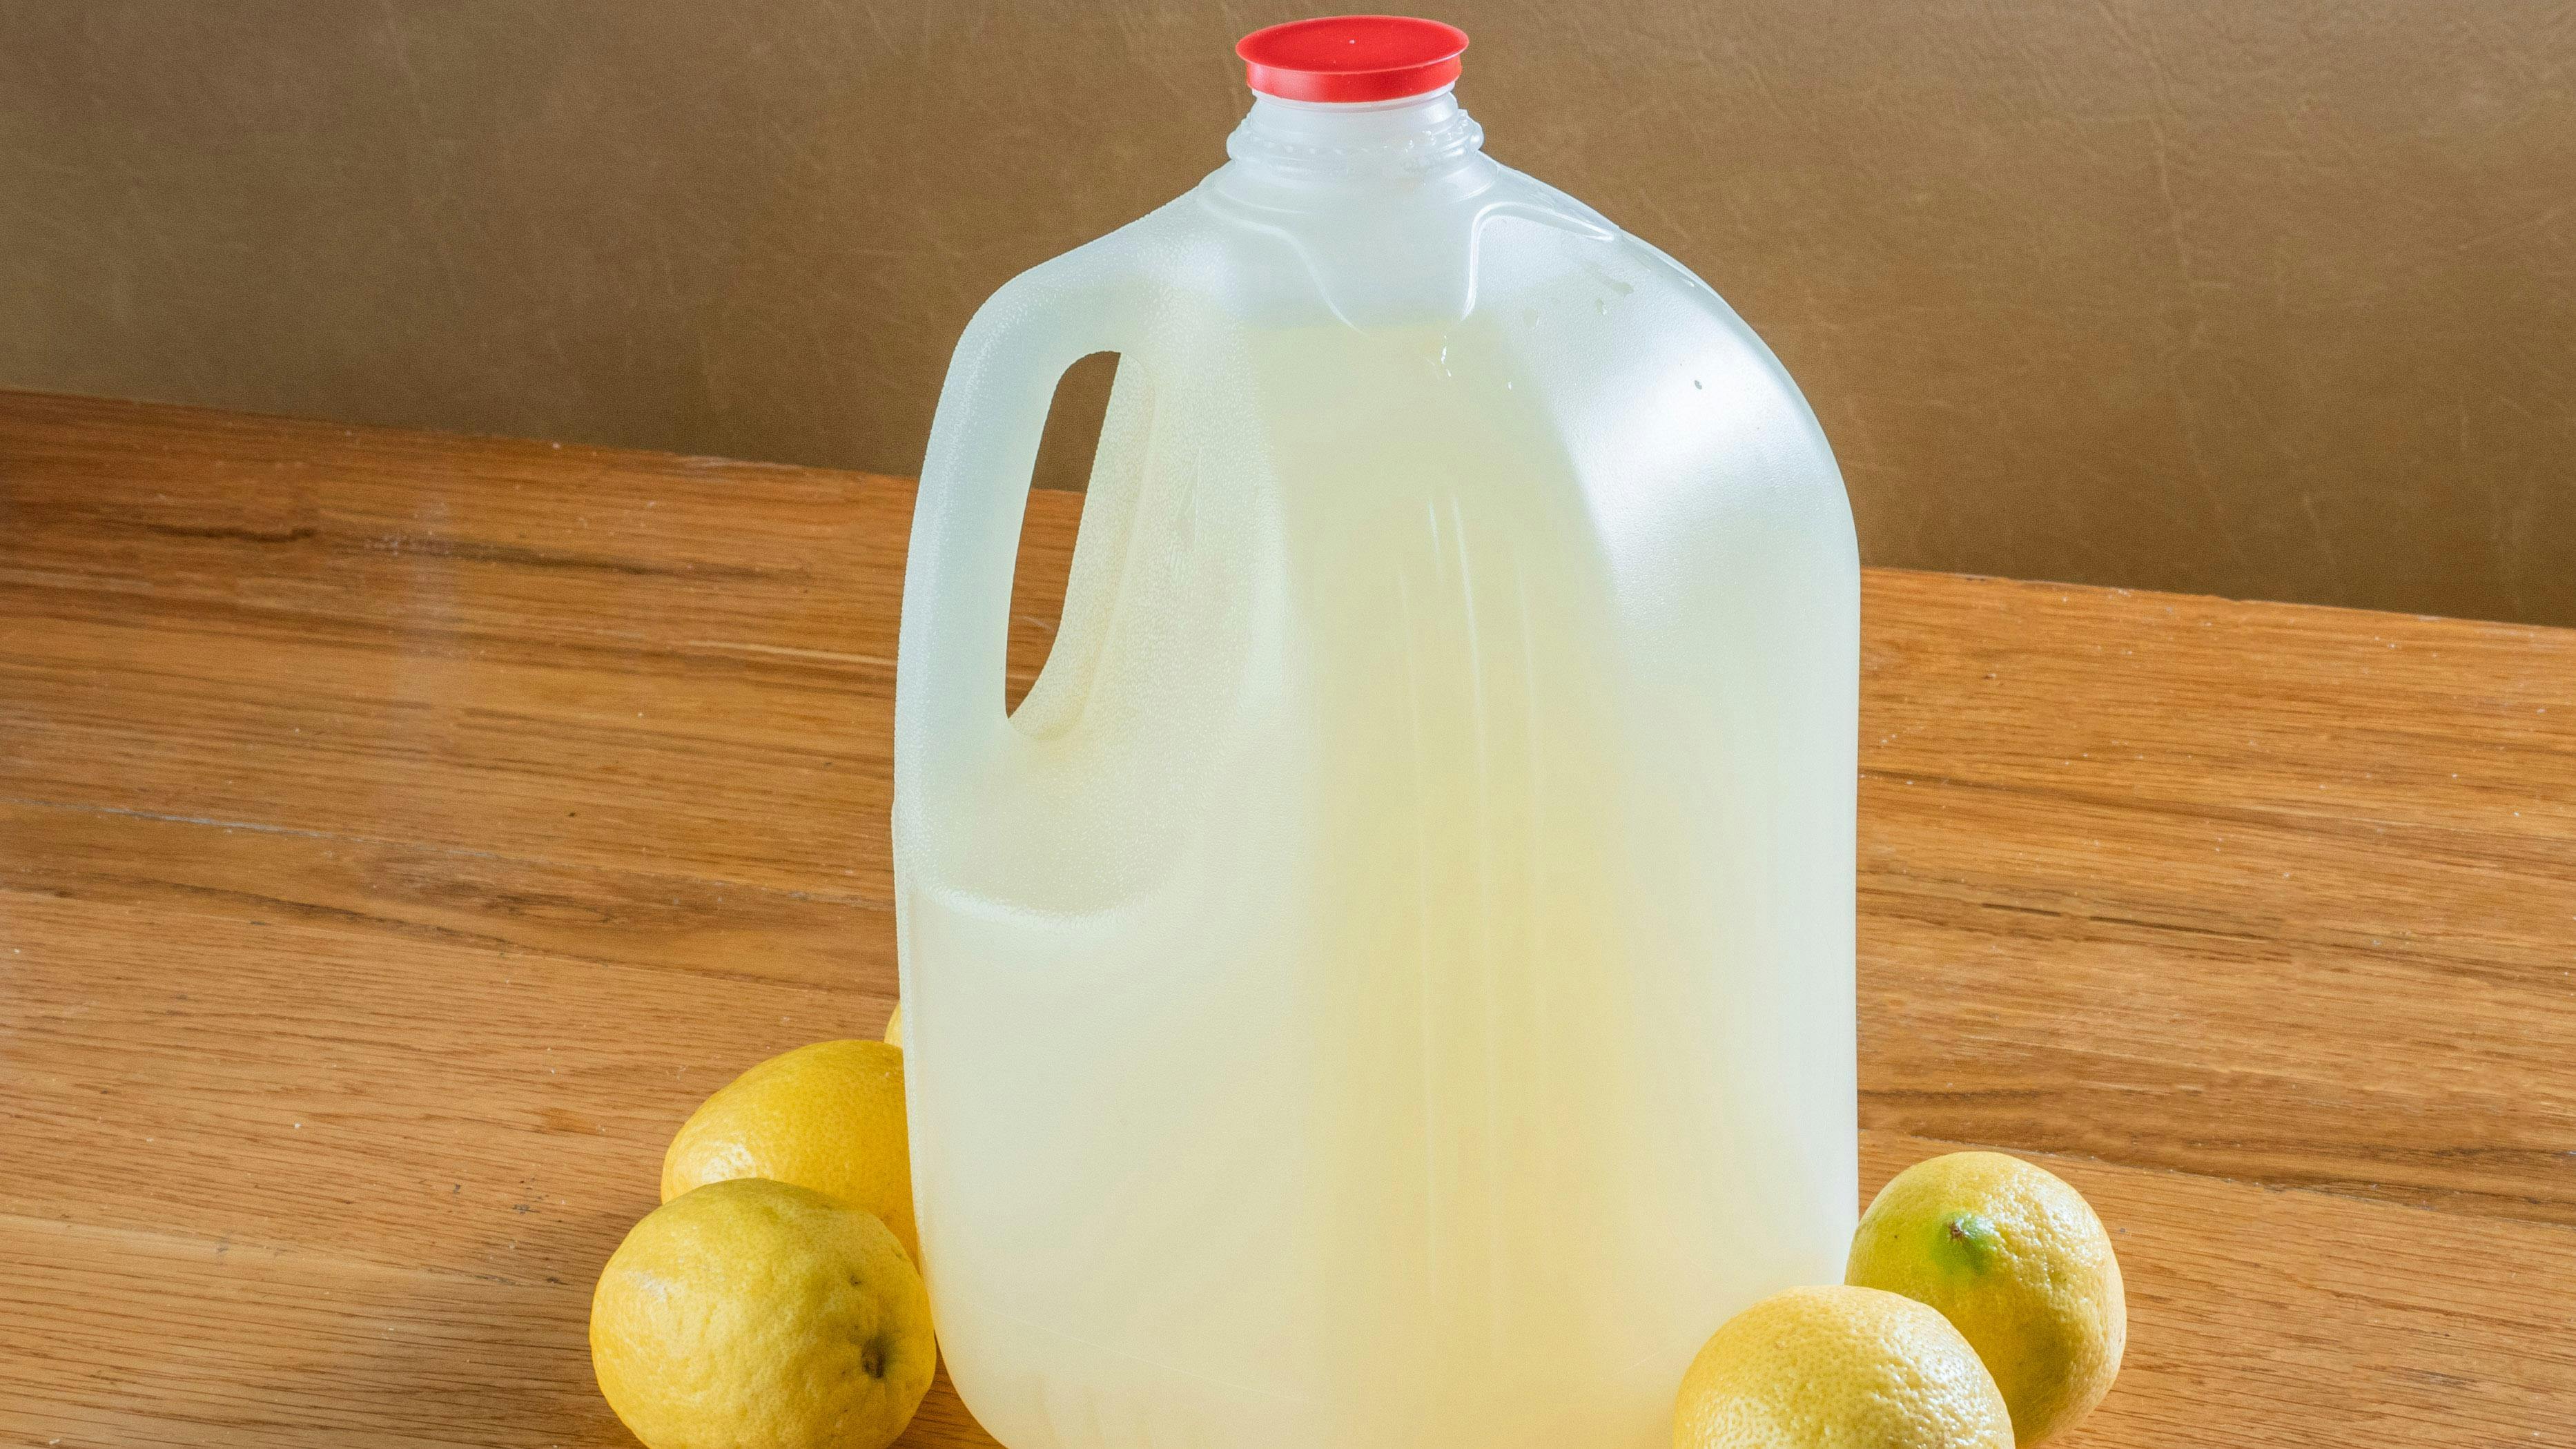 Gallon Lemonade from Happy Chicks - Burnet Rd in Austin, TX